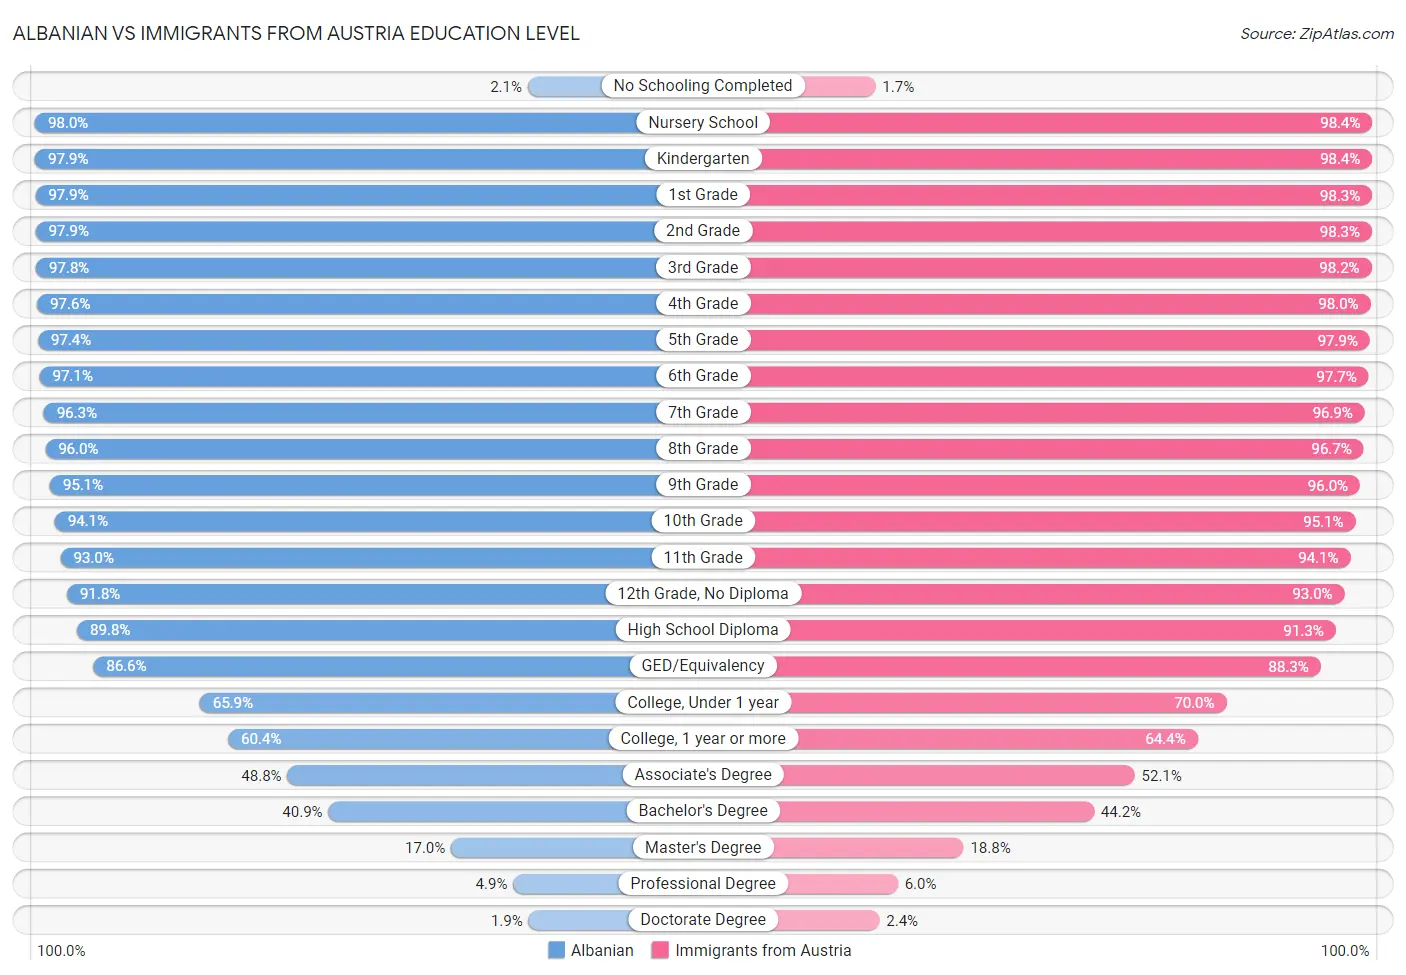 Albanian vs Immigrants from Austria Education Level